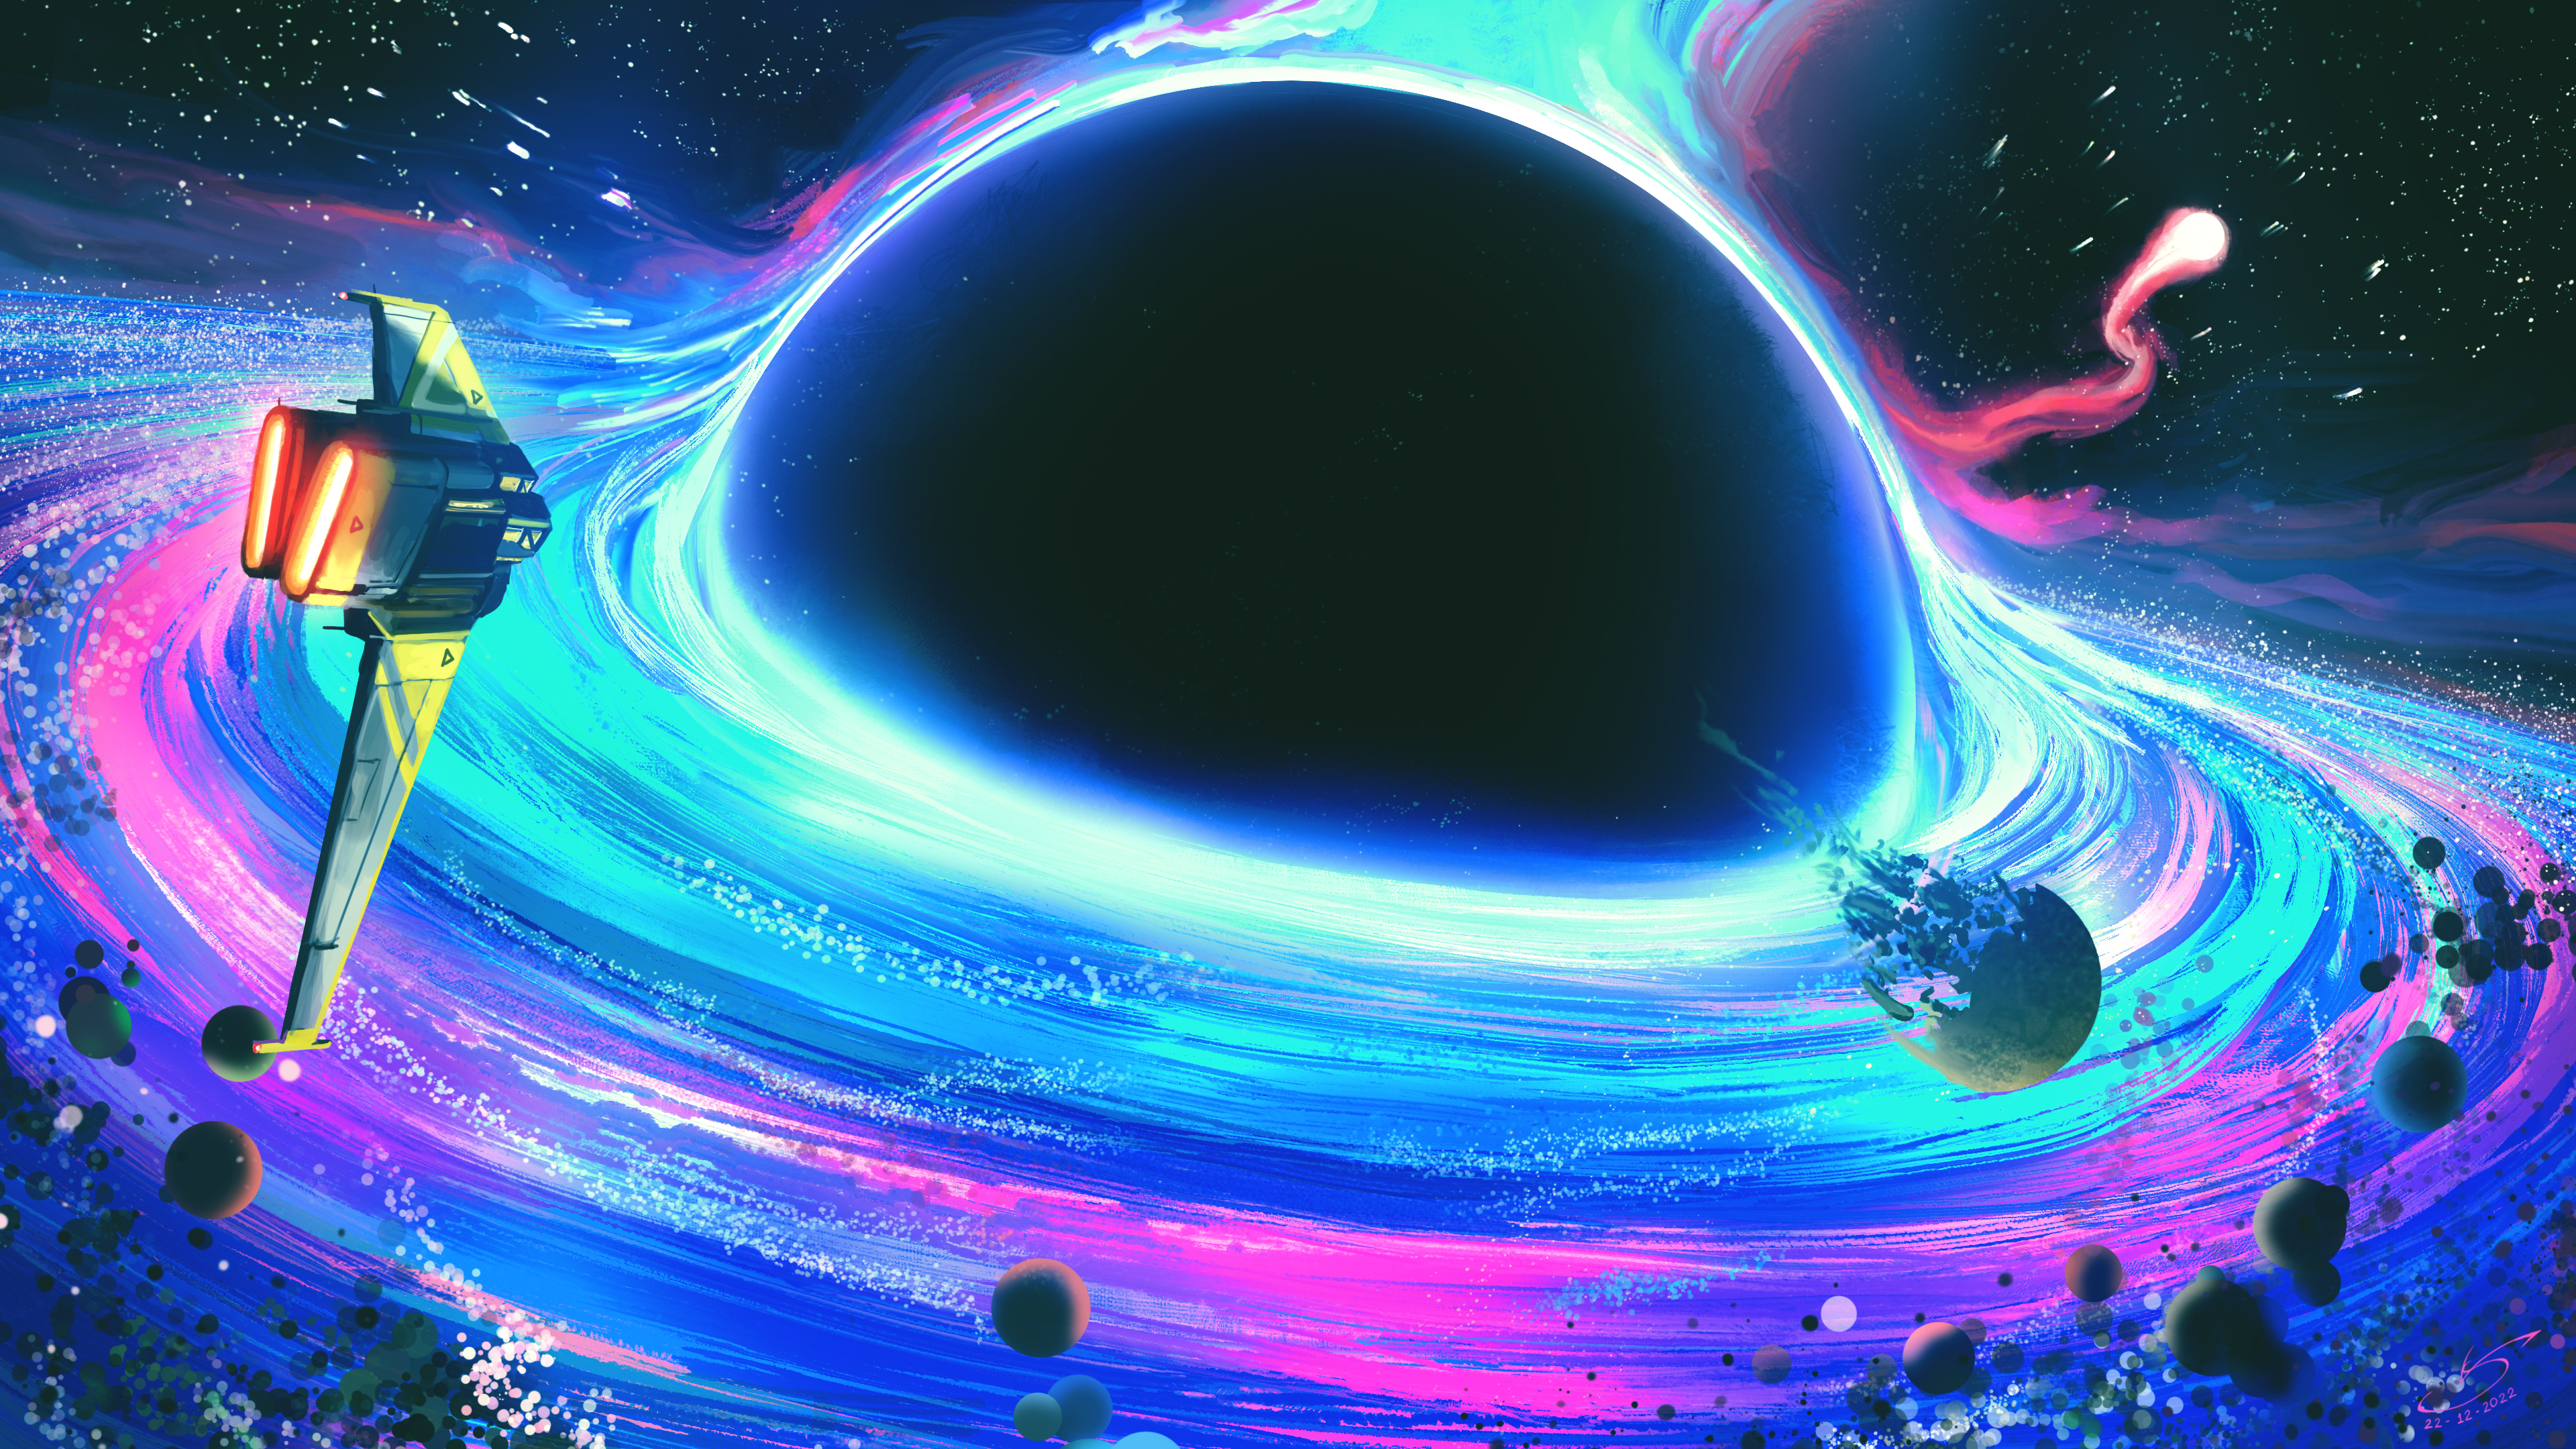 VSales Digital Digital Art Artwork Illustration Space Space Art Galaxy Stars Black Holes Spaceship B 3840x2160